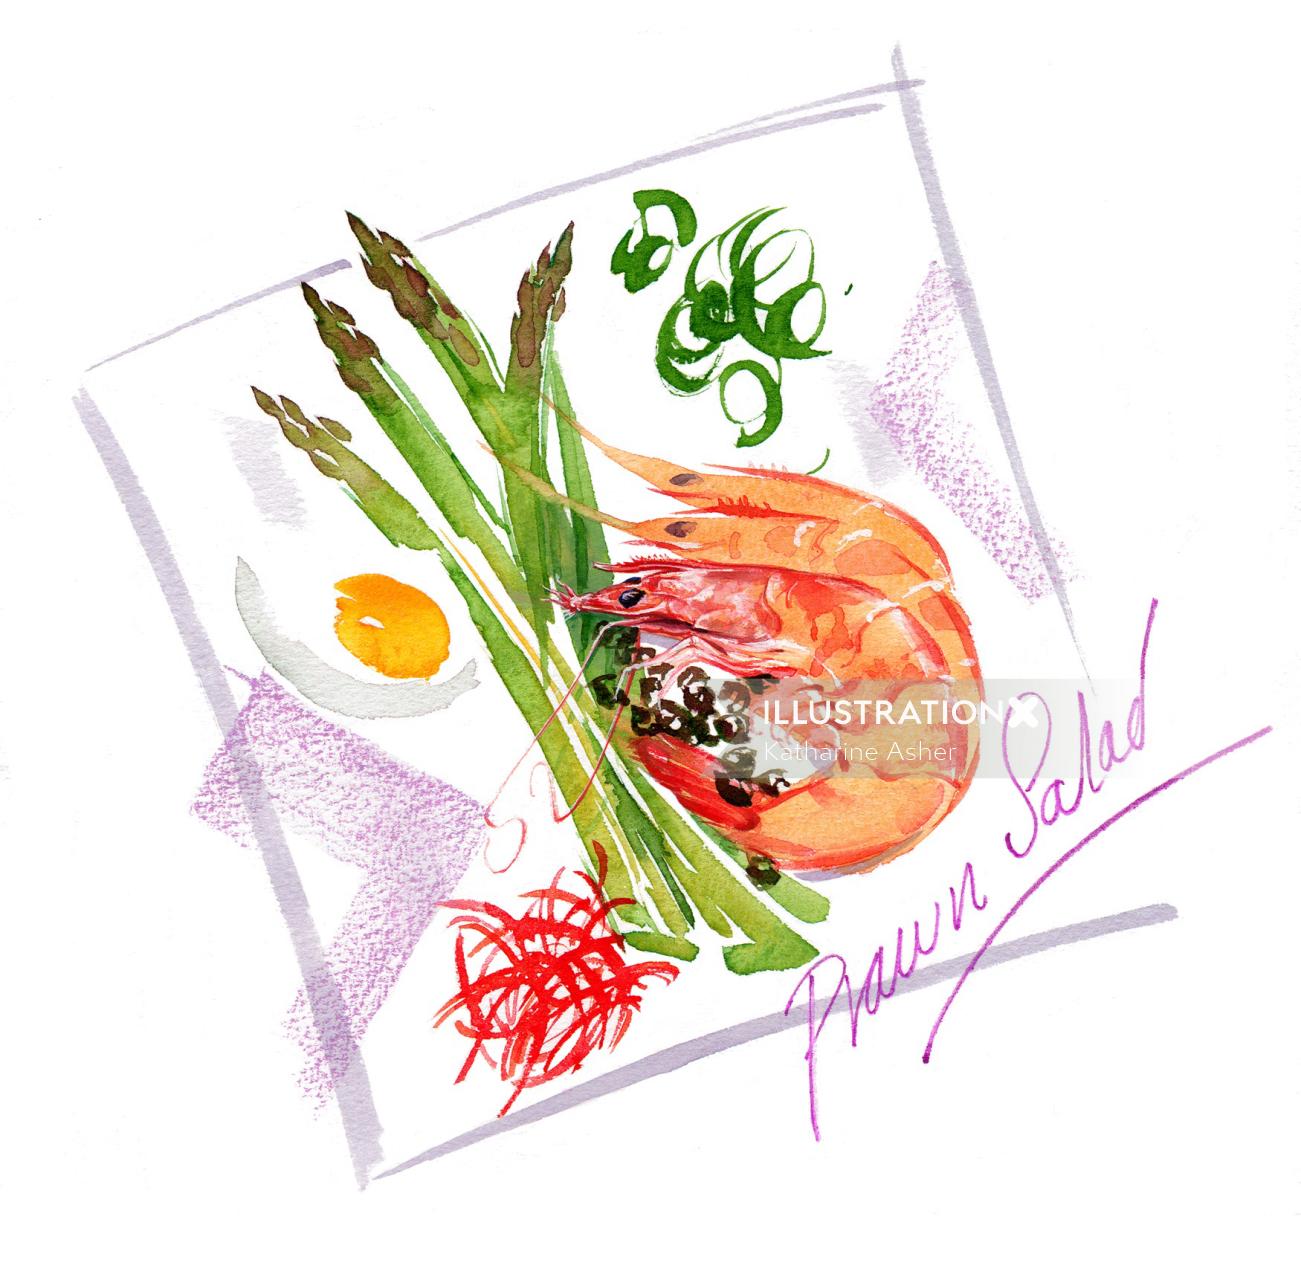 dessin aquarelle éditorial de salade de crevettes